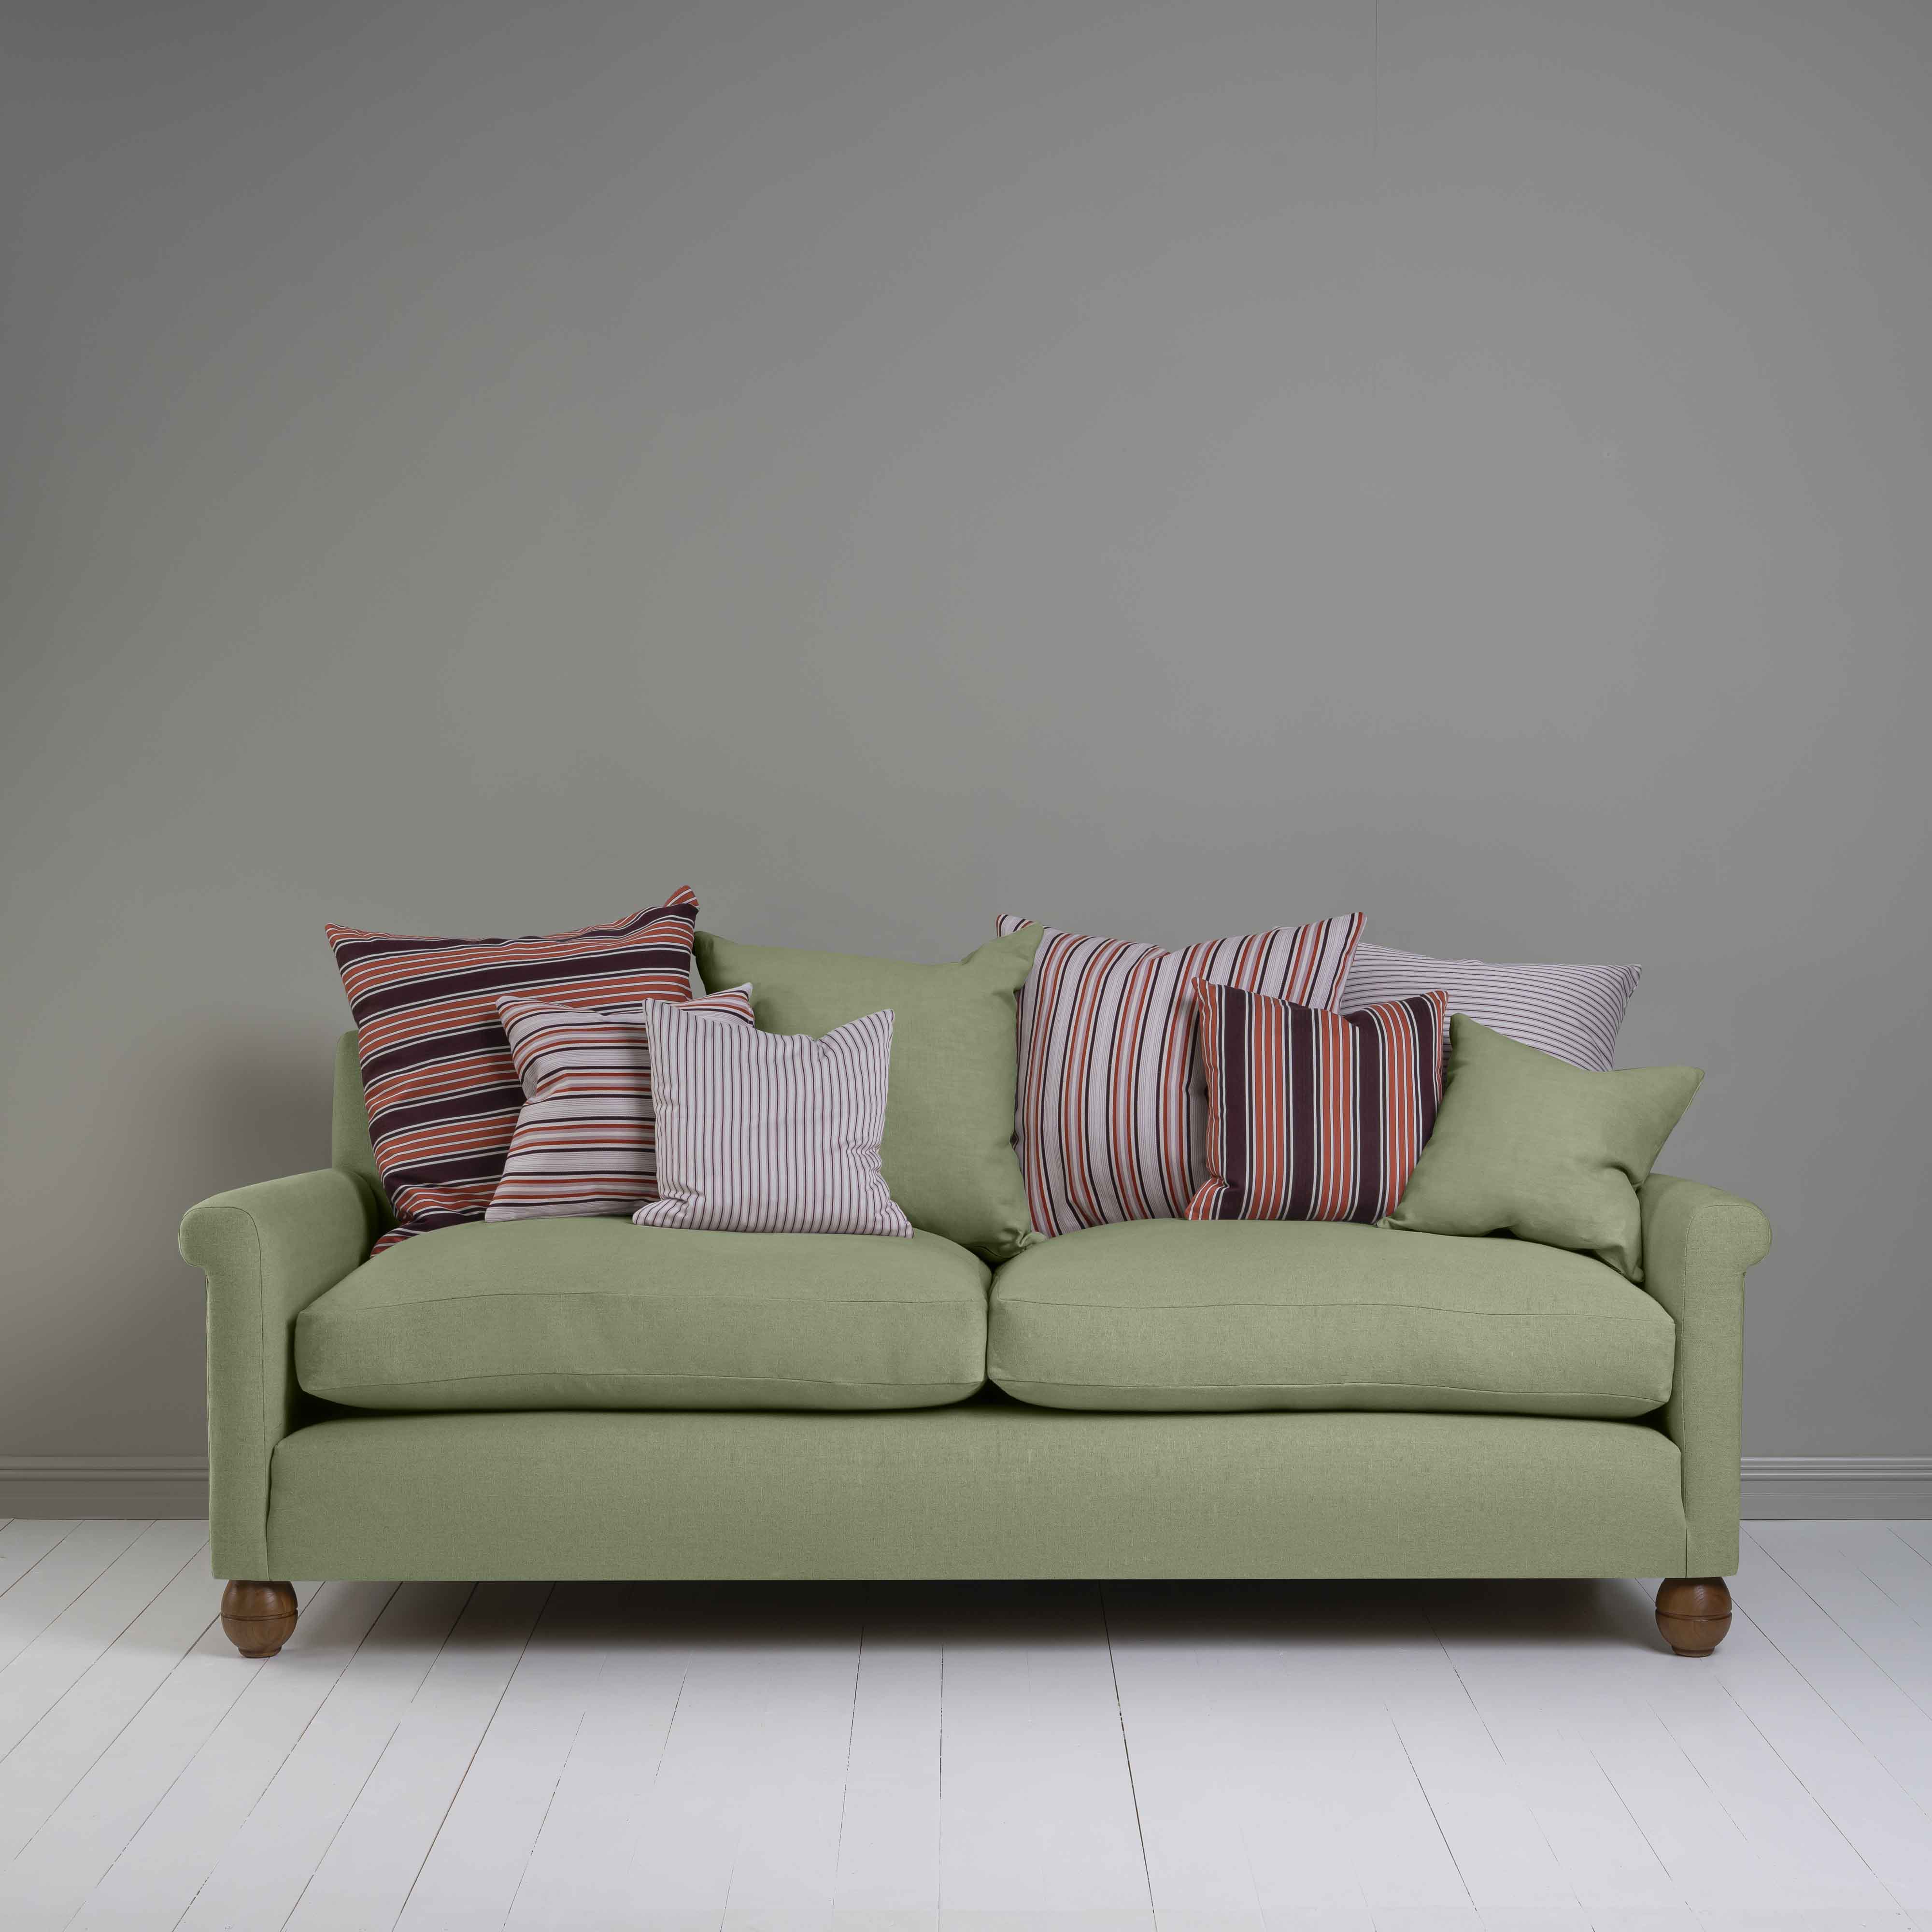  Idler 4 seater sofa in Laidback Linen Moss 